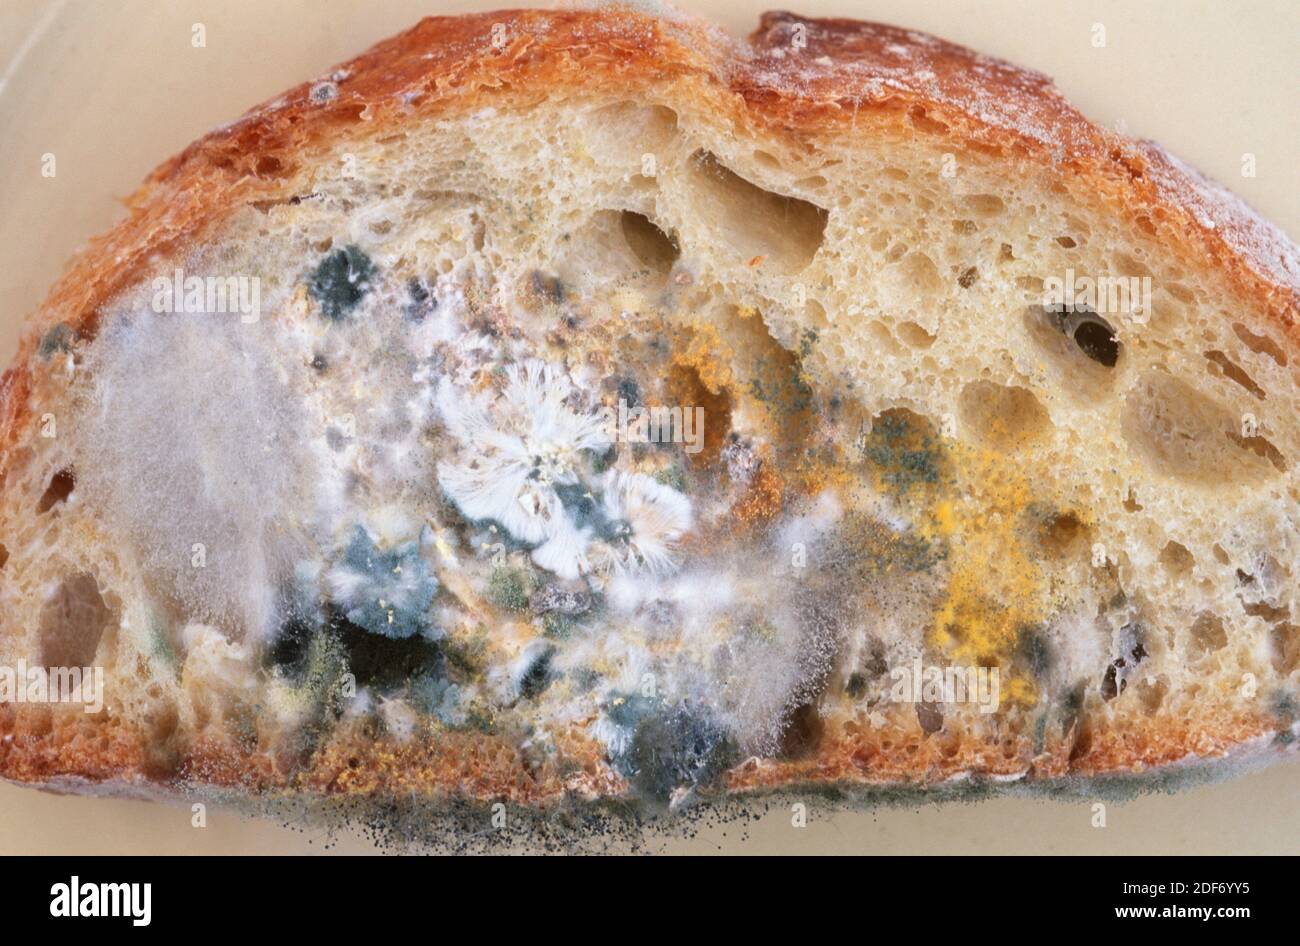 Rhizopus: bread mold – Inanimate Life